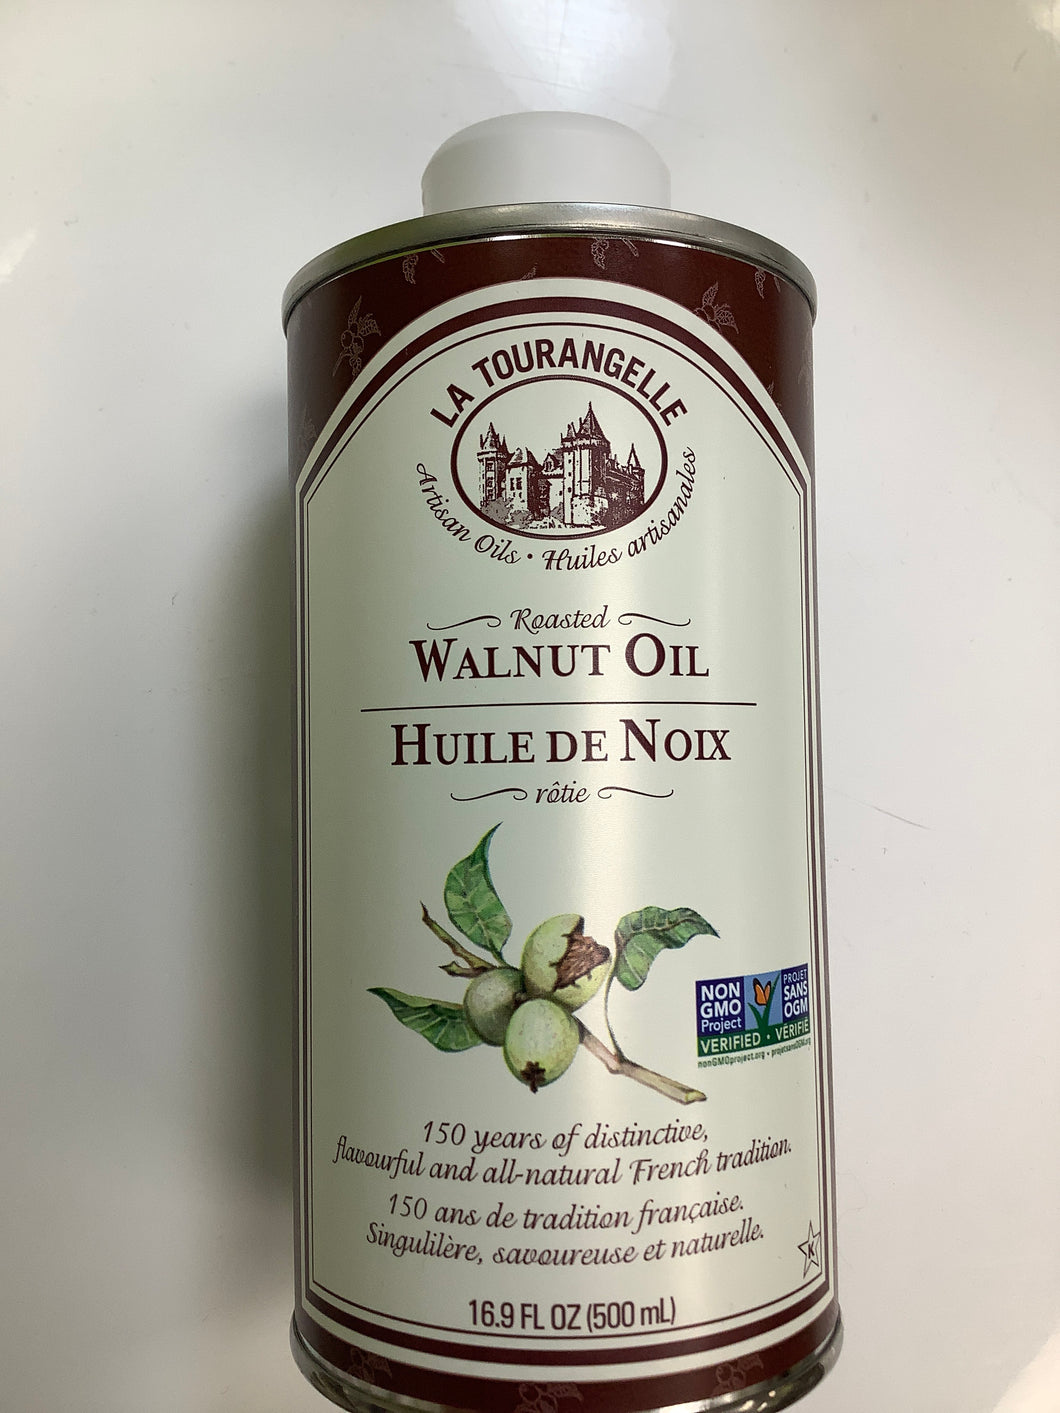 La Tourangelle Roasted Walnut Oil